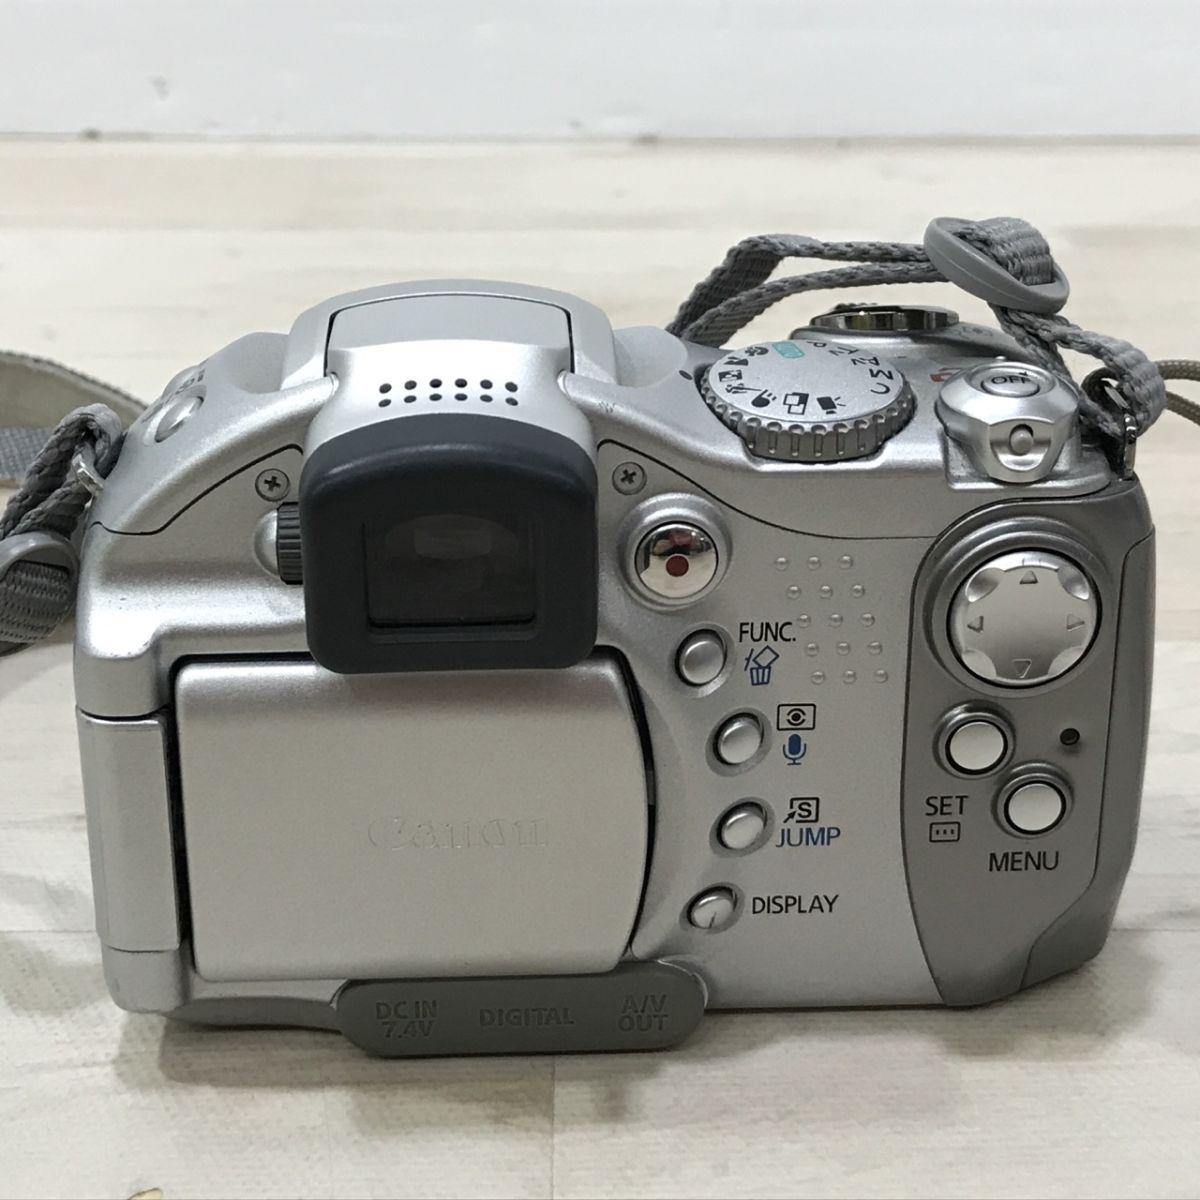 Canon キャノン PowerShot S1 iS PC1058 デジカメ 5.8-58mm 1:2.8-3.1[C1312]_画像5